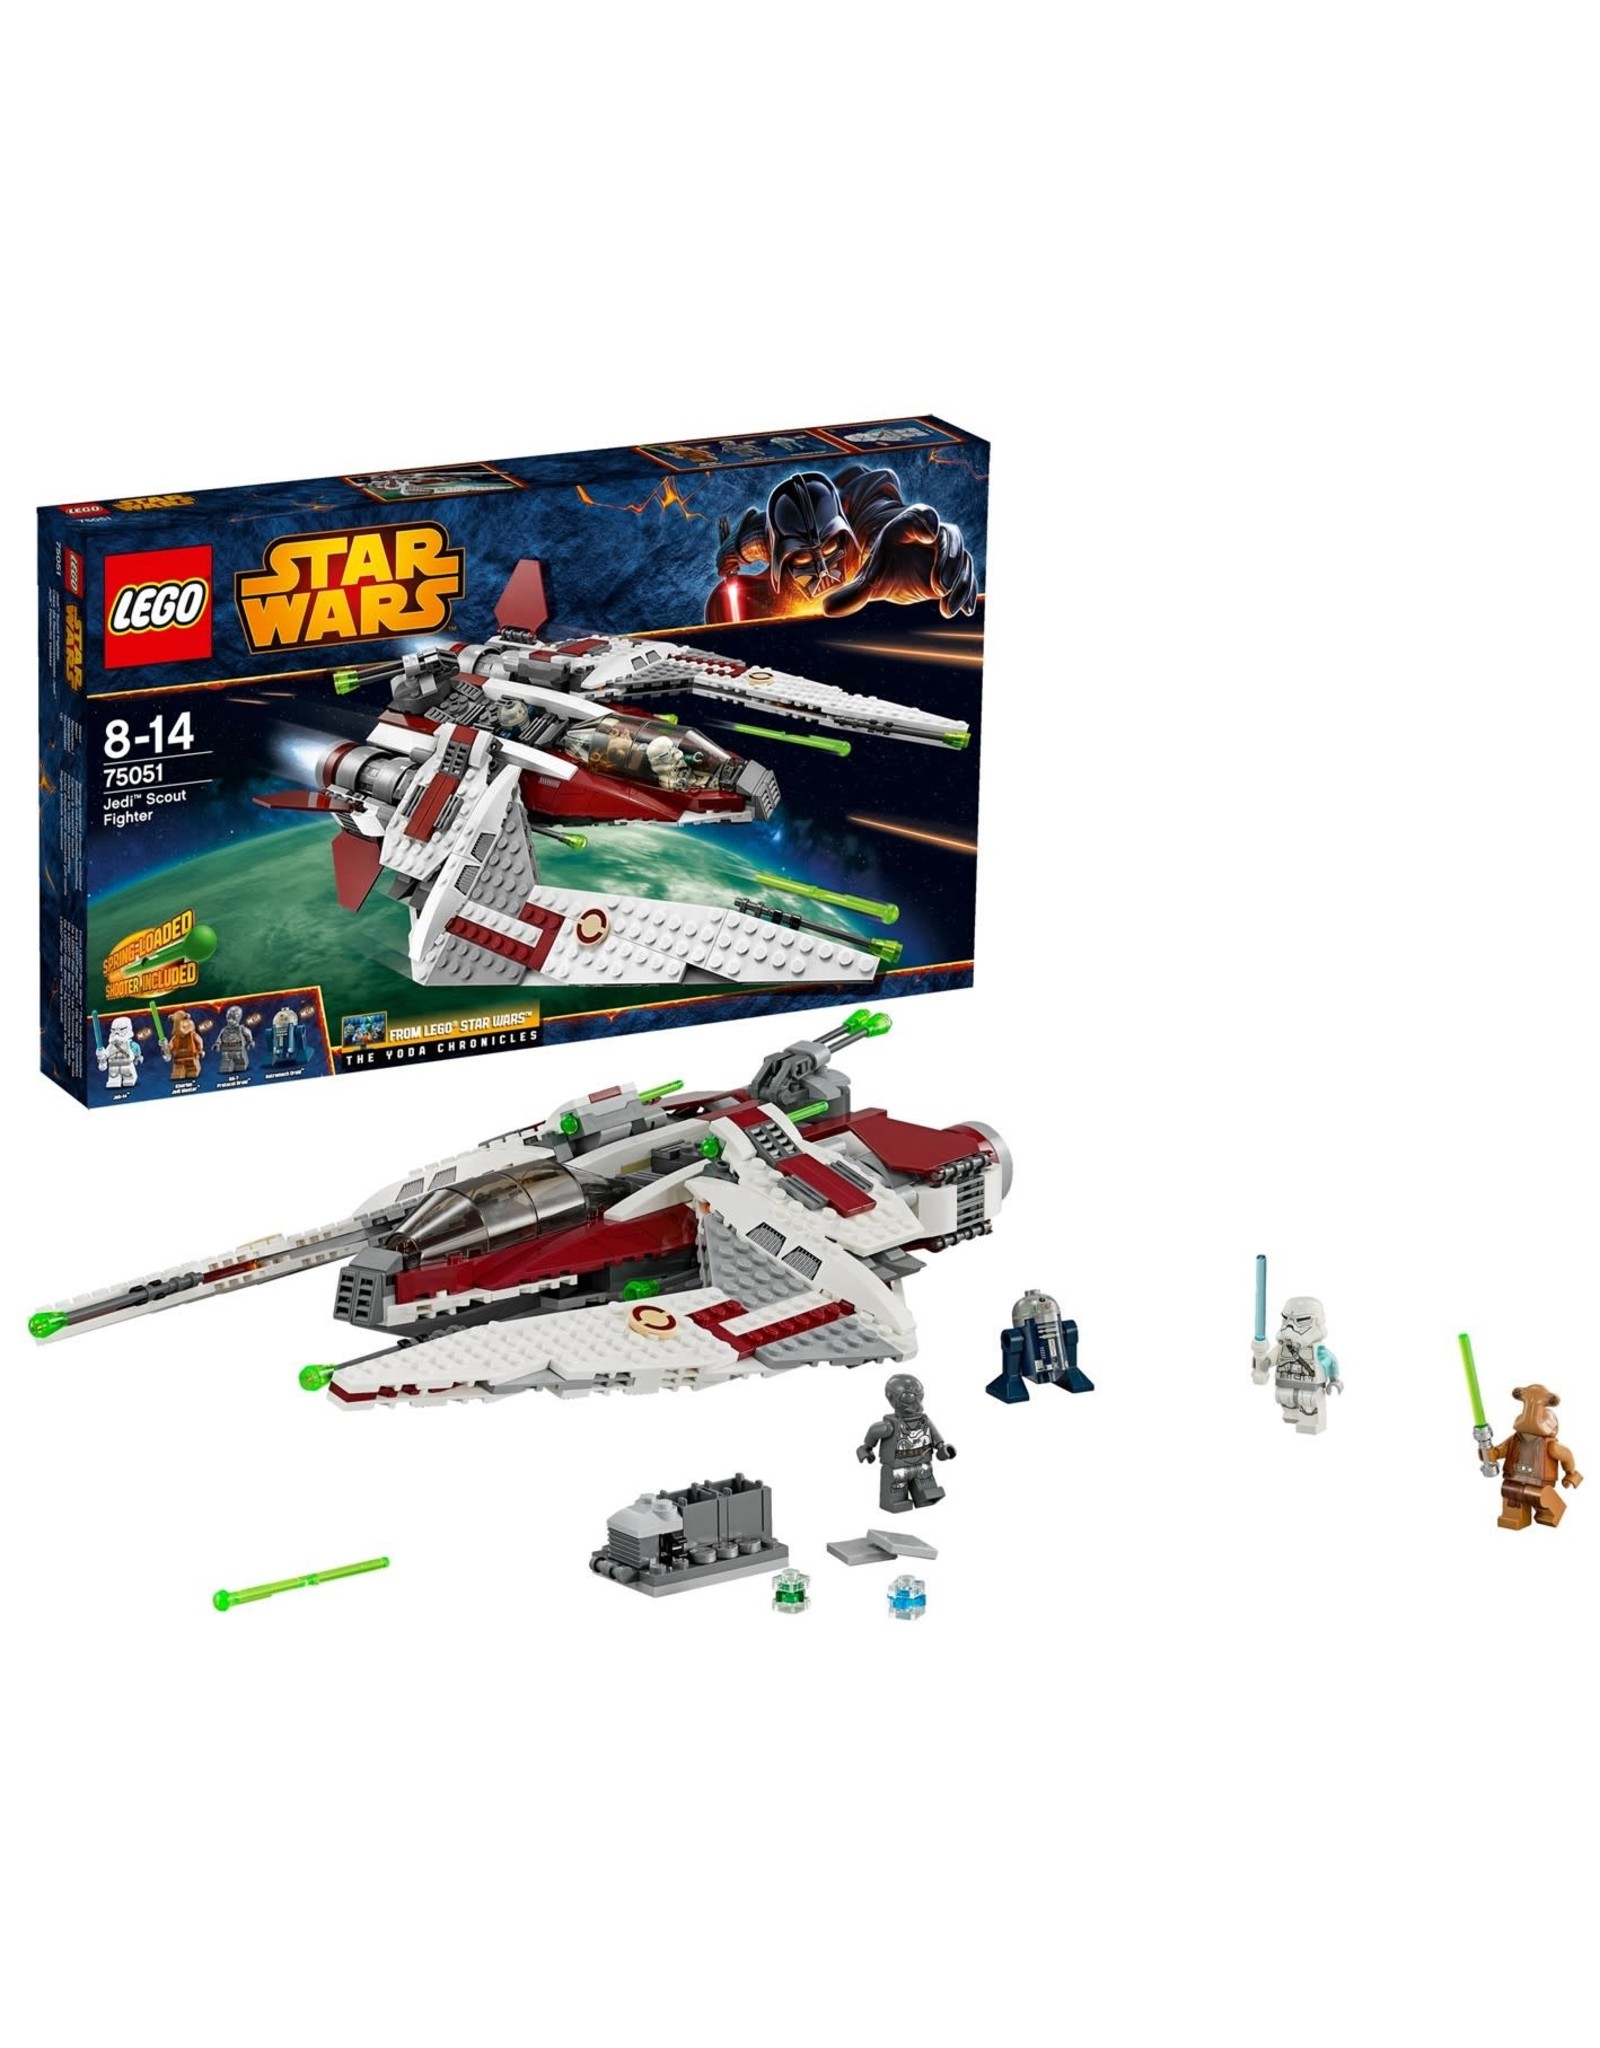 LEGO Lego Star Wars 75051 Jedi Scout Fighter